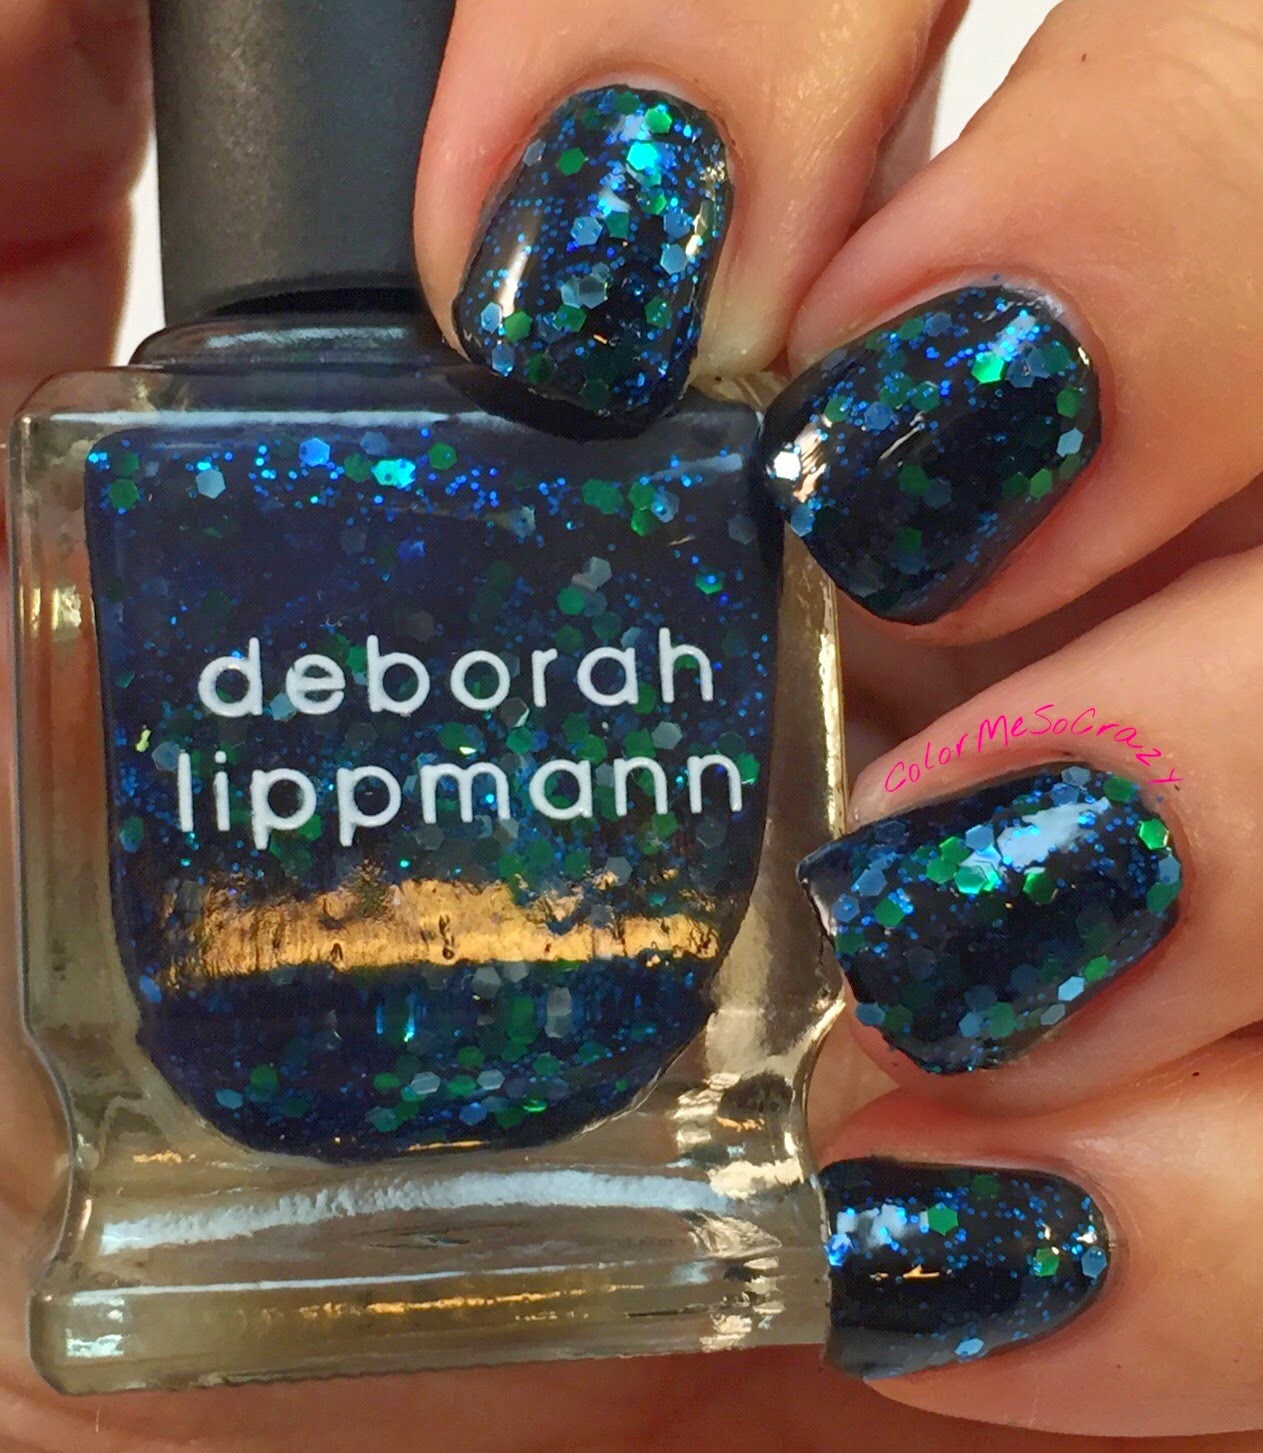 deborah lippmann-across the universe- glitter polish- jelly polish- green and blue glitters